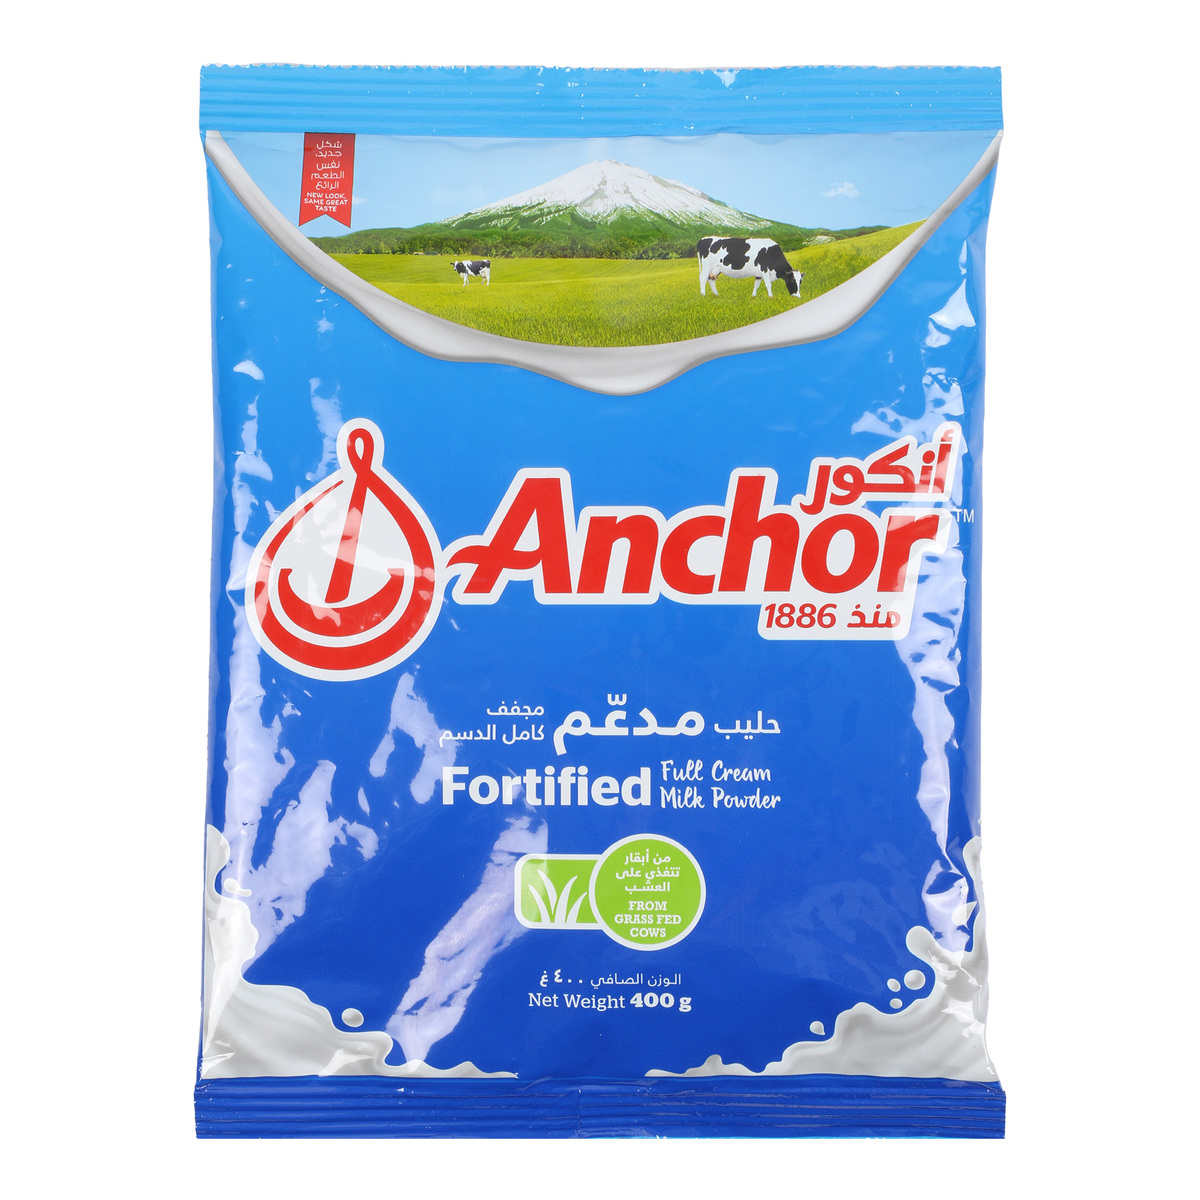 Anchor Full Cream Milk Powder Pouch 400g